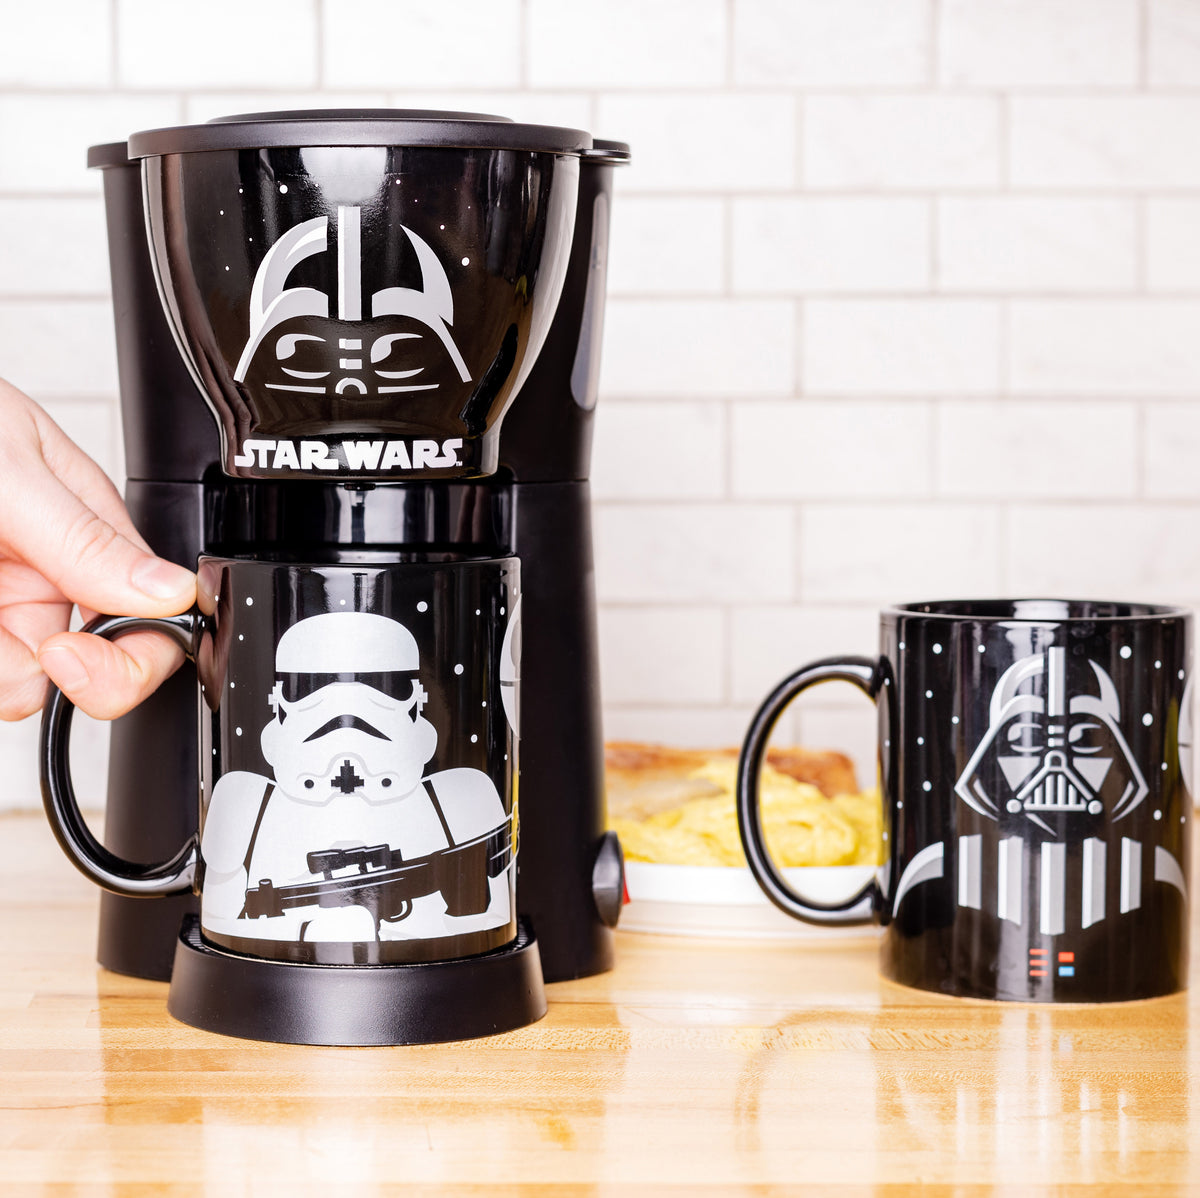 Star Wars Darth Vader & Stormtrooper Single Cup Coffee Maker & Mug Set